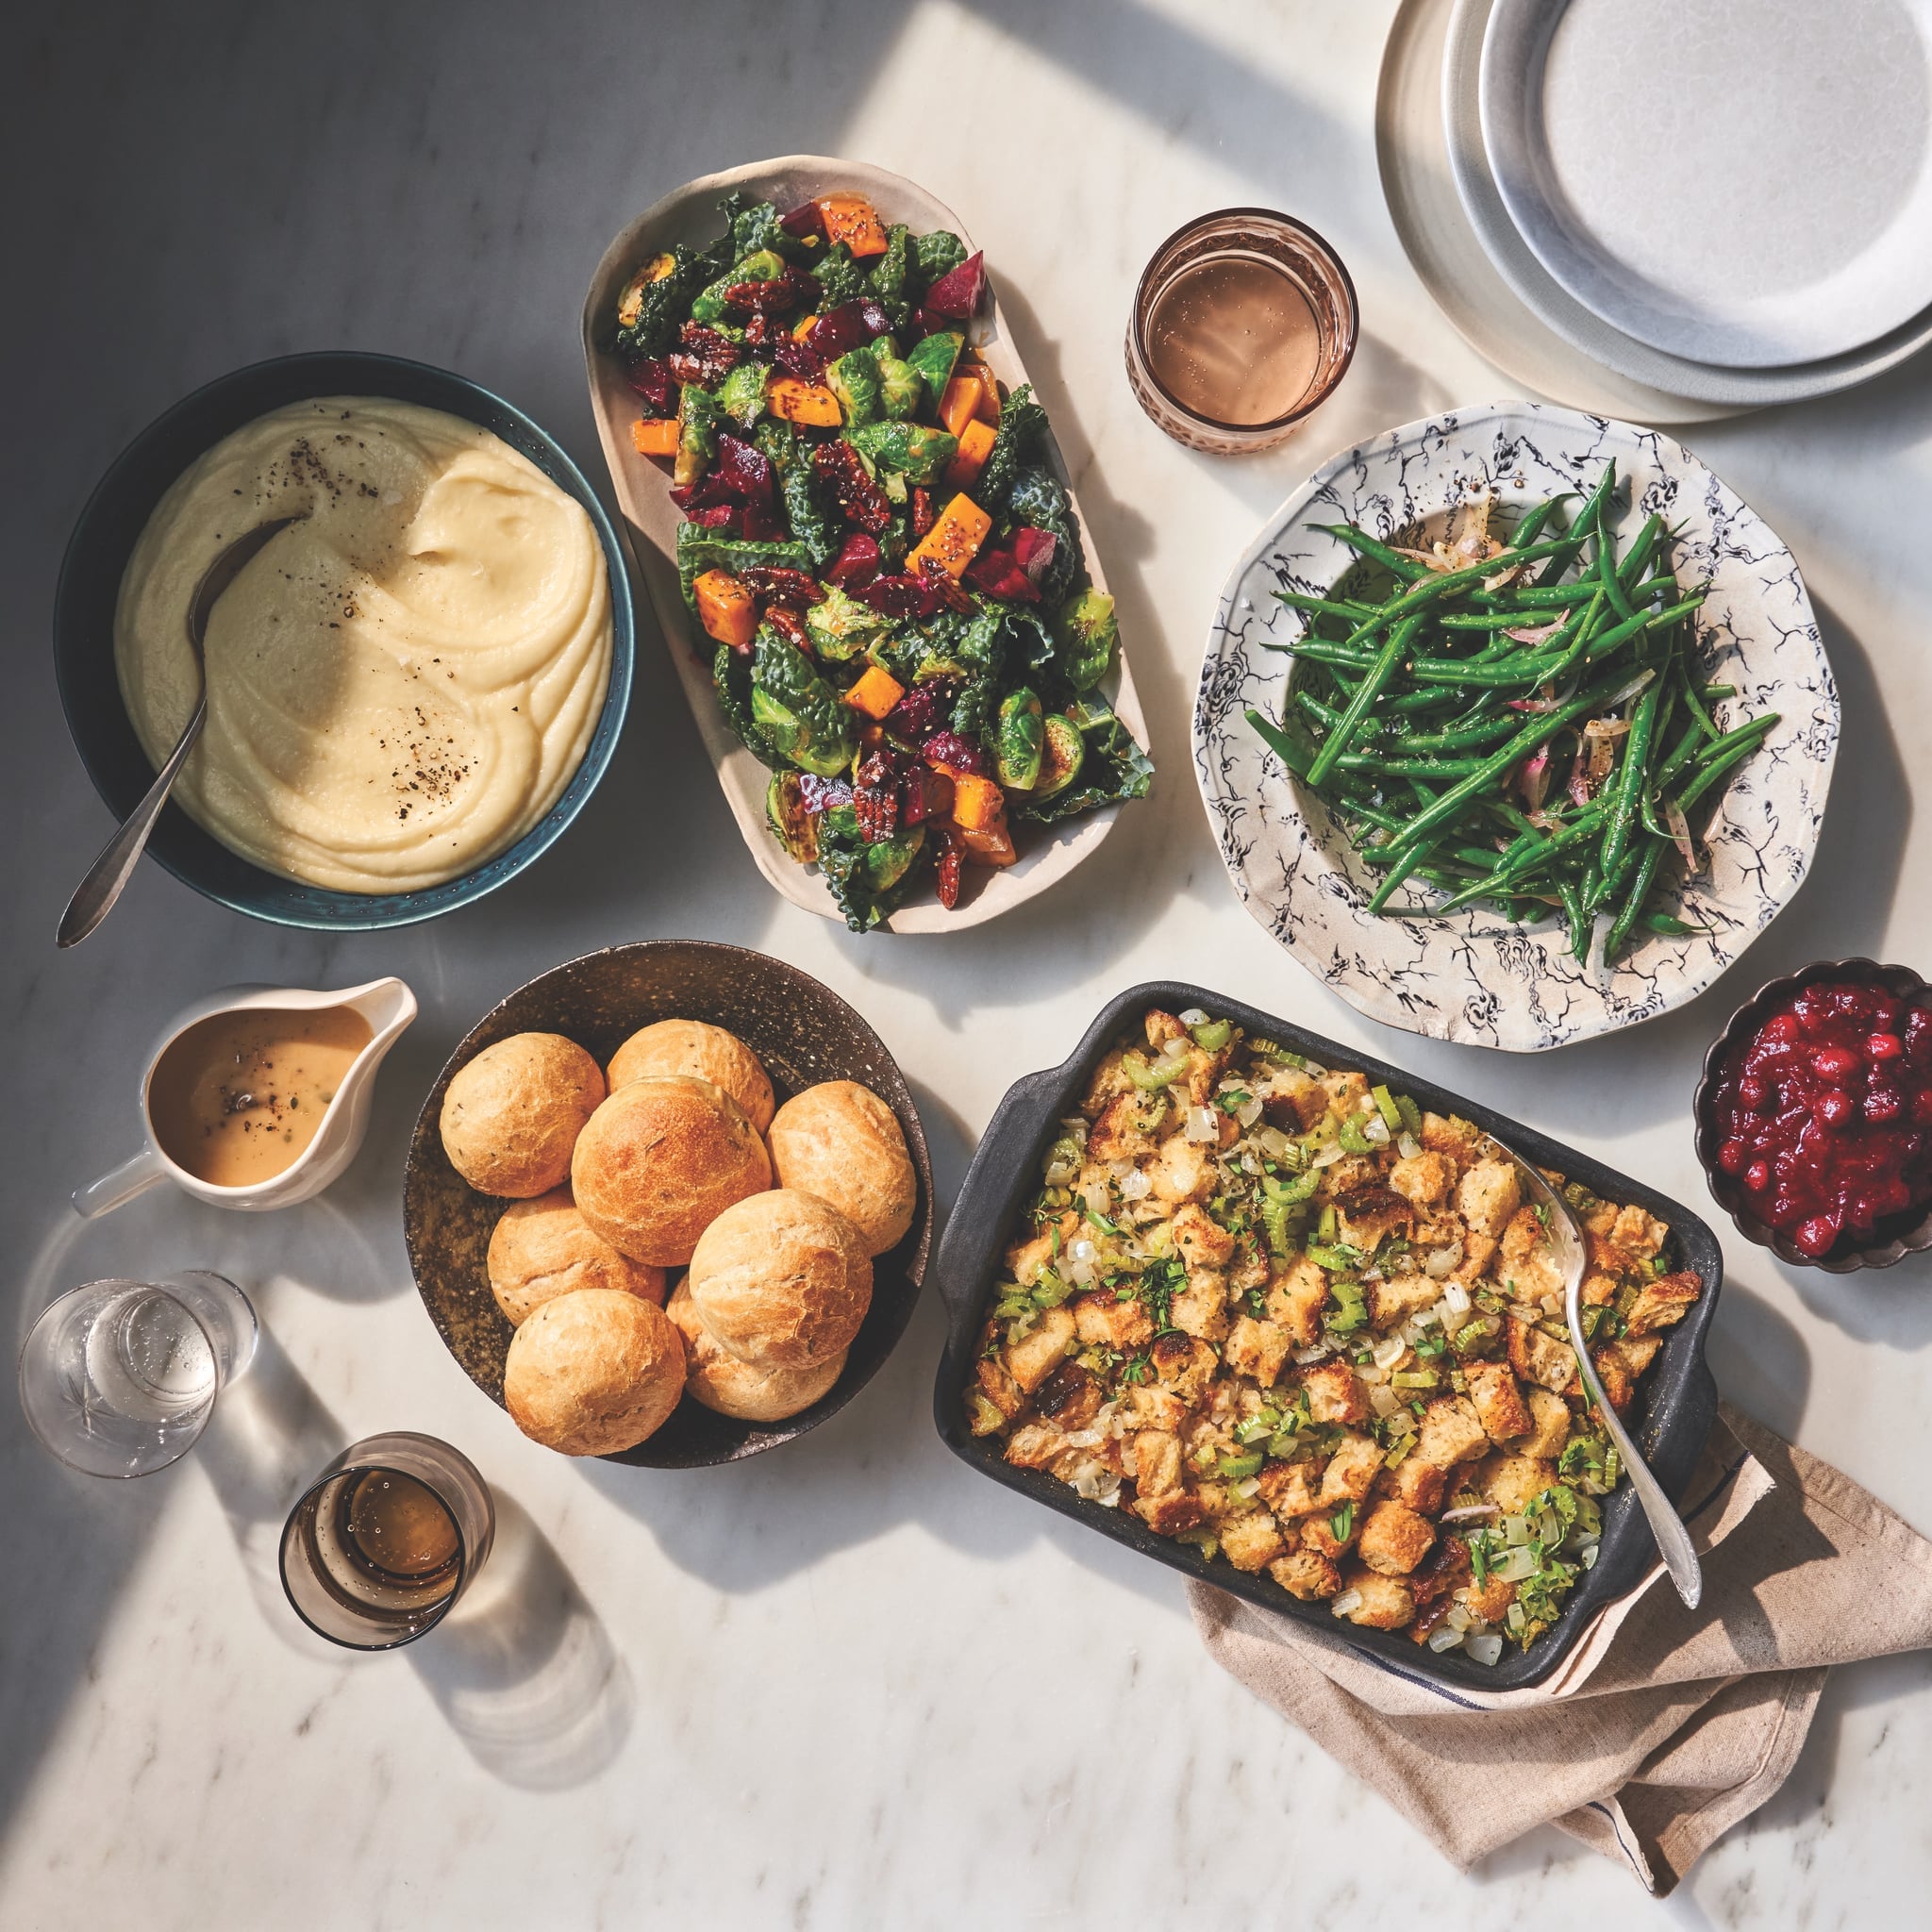 Whole Foods Thanksgiving Dinner Options | 2021 | POPSUGAR Food